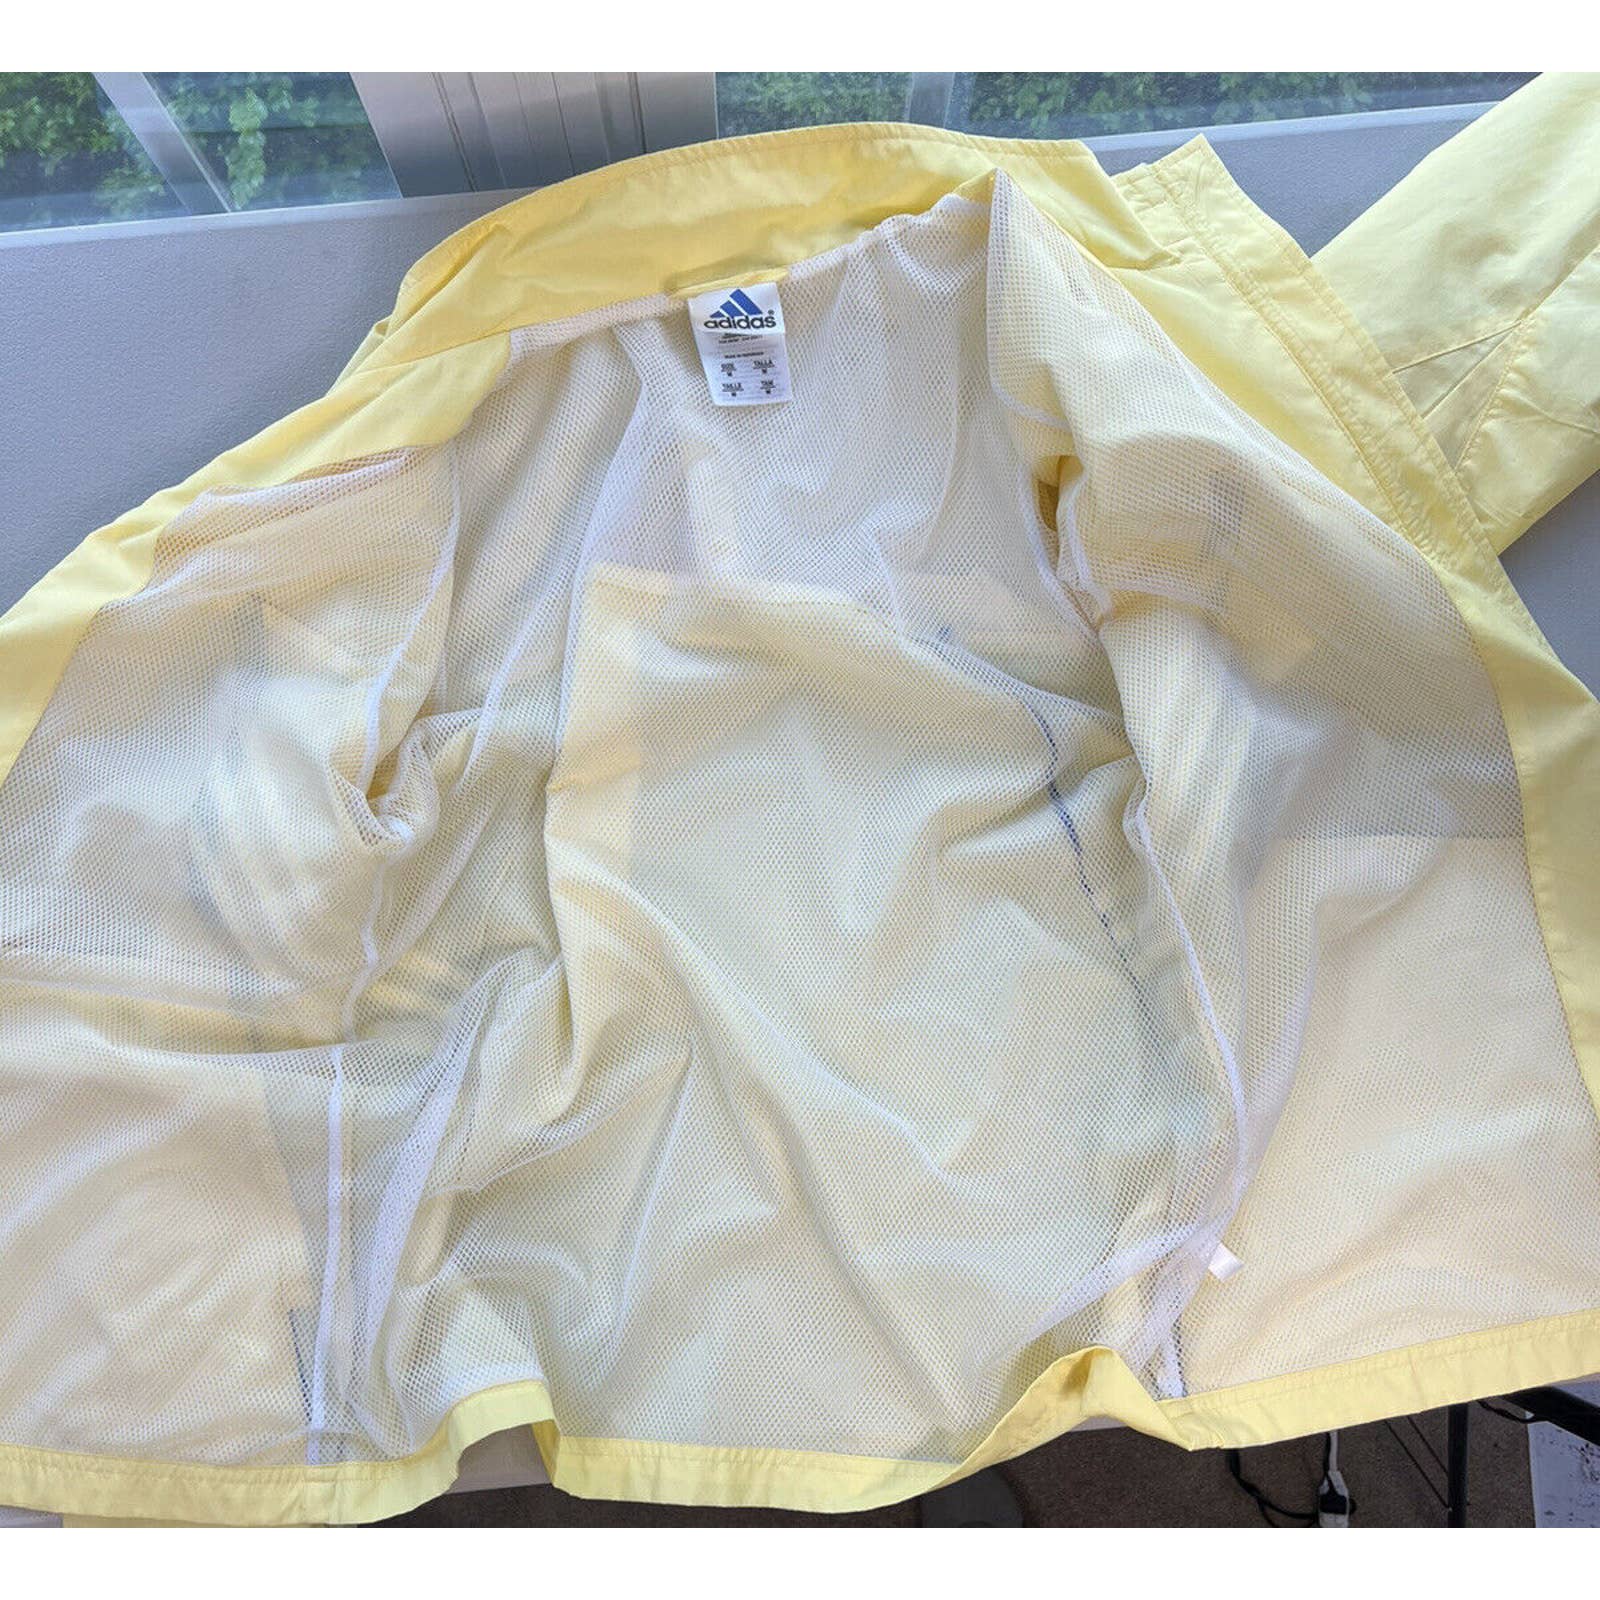 Adidas Windbreaker Jacket Womens Medium Yellow Nylon Vintage Lightweight Vented